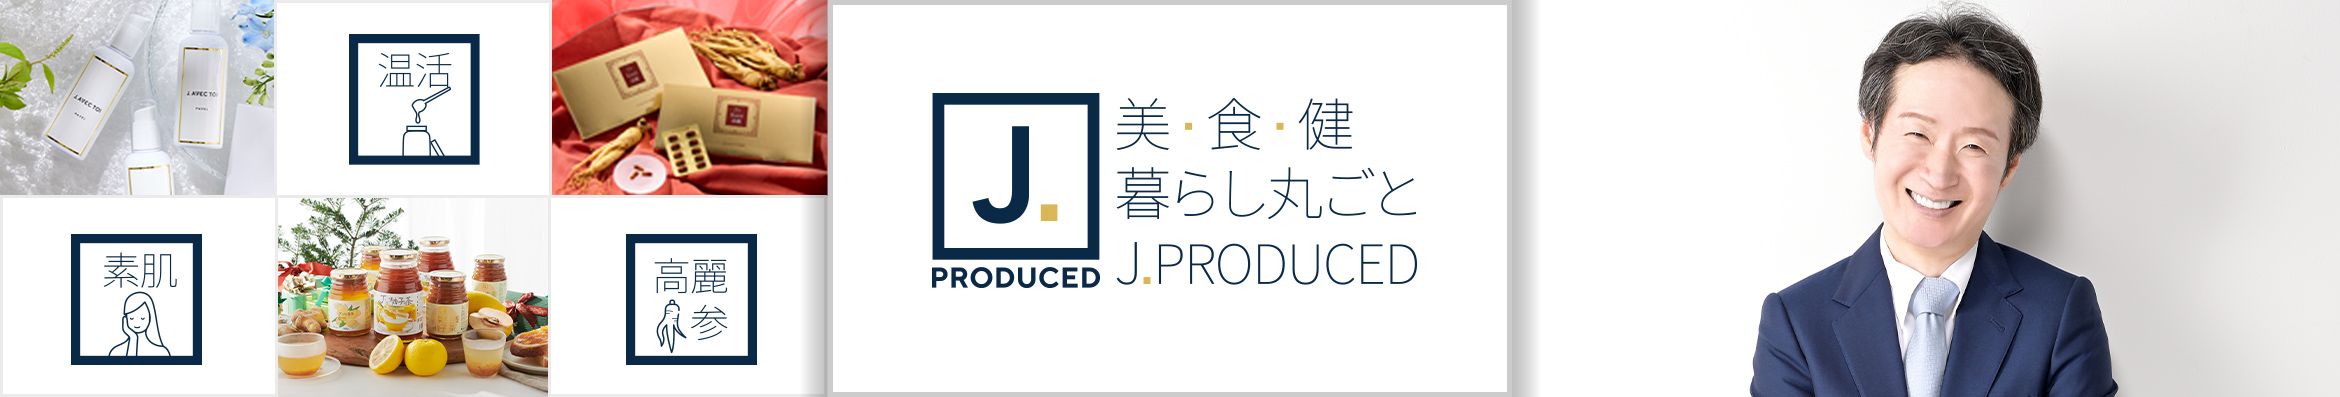 J.ノリツグ特集 通販 - QVCジャパン | QVC.jp